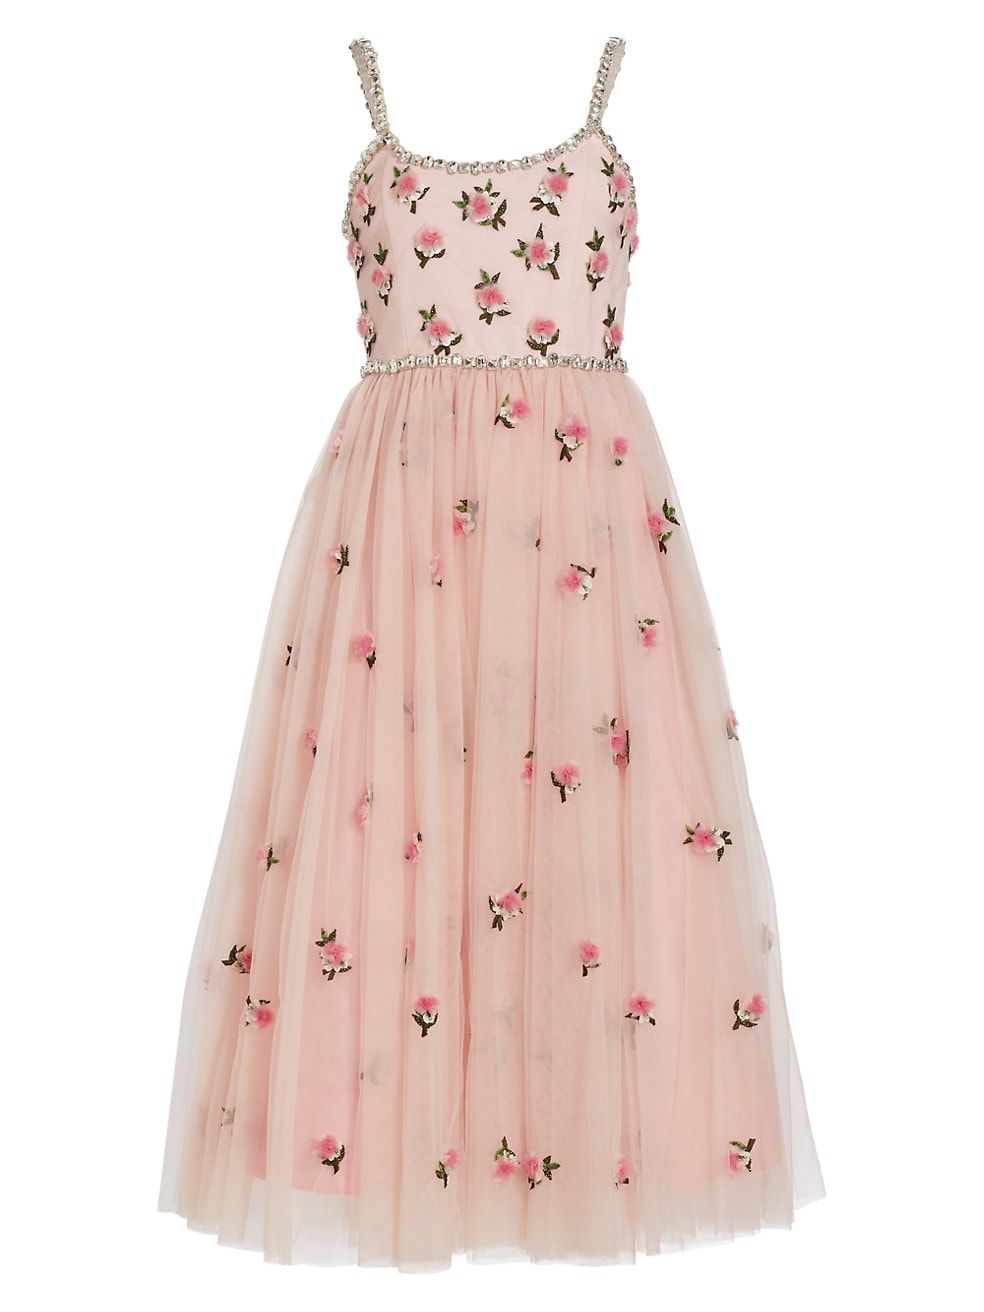 Alice + Olivia Lupita Crystal-Embellished Floral Dress | Saks Fifth Avenue